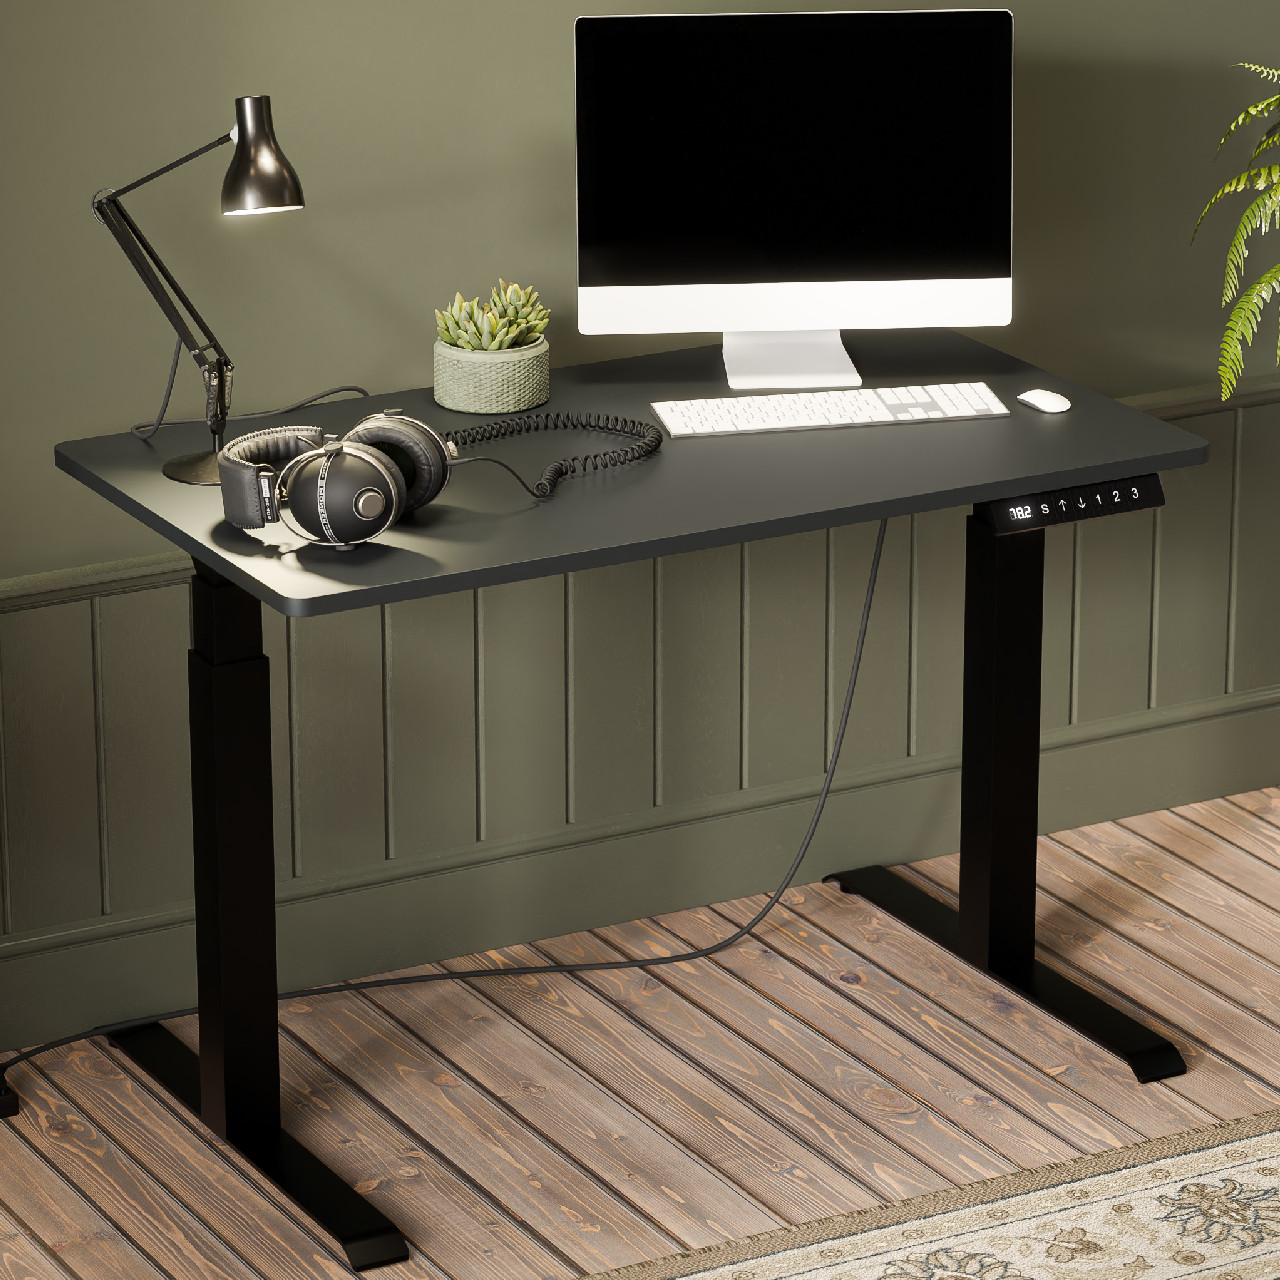 Height adjustable standing desks MOON black / anthracite